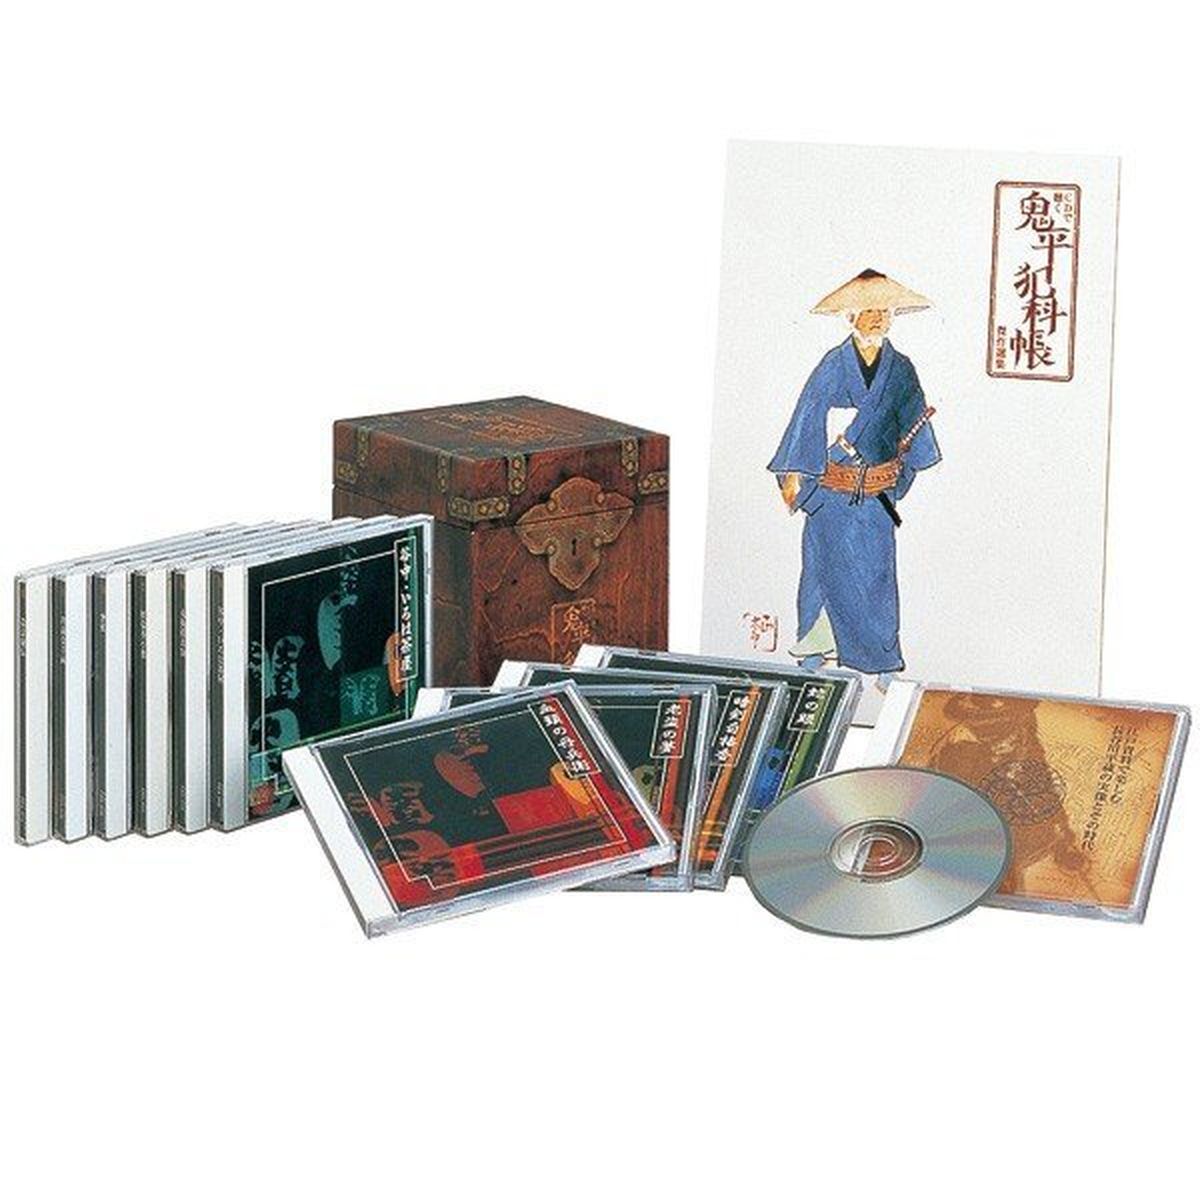 ■【CD】CDで聴く「鬼平犯科帳」傑作選集 11枚組